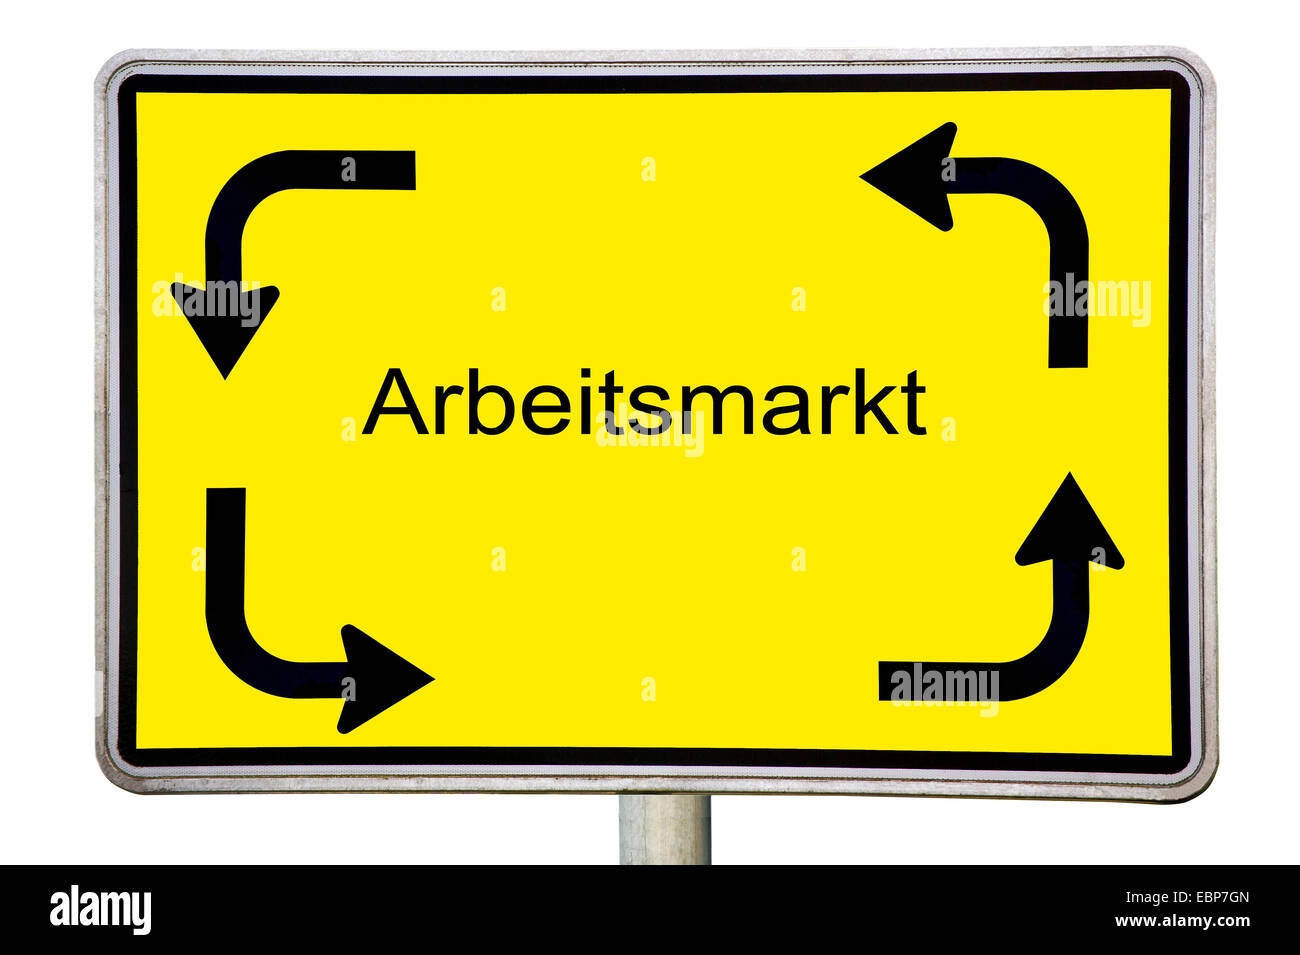 symbol sign 'job market' Stock Photo